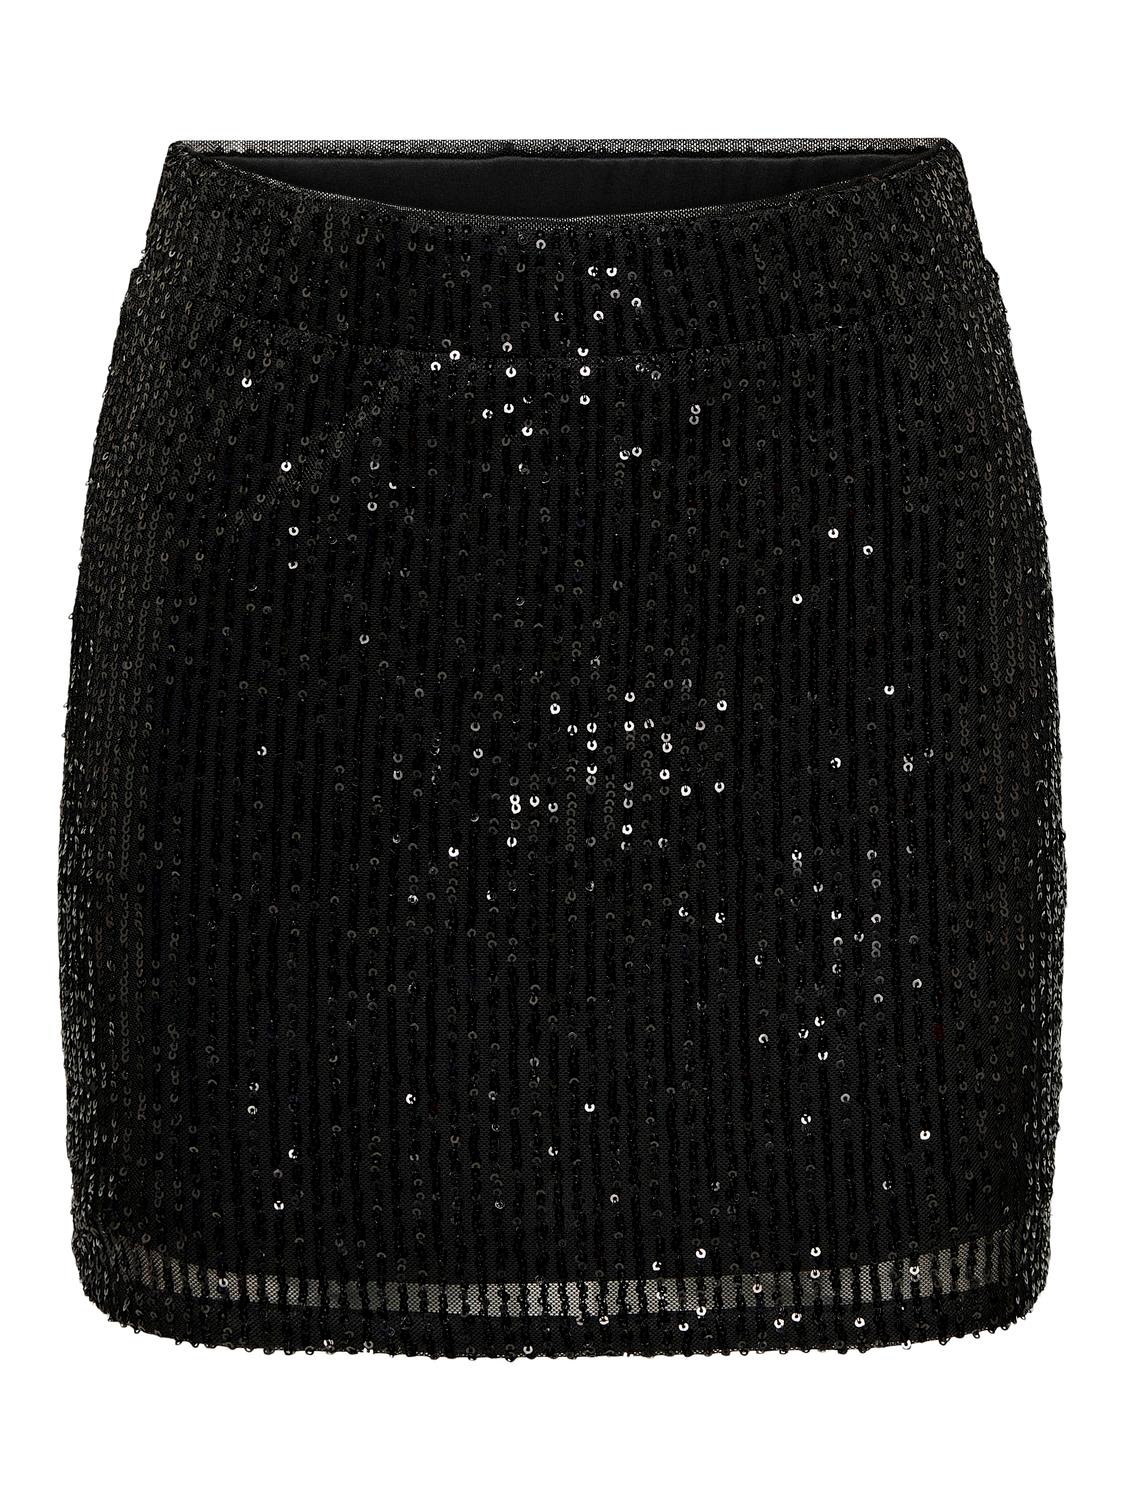 ONLY Mini skirt with glitter -Black - 15310019